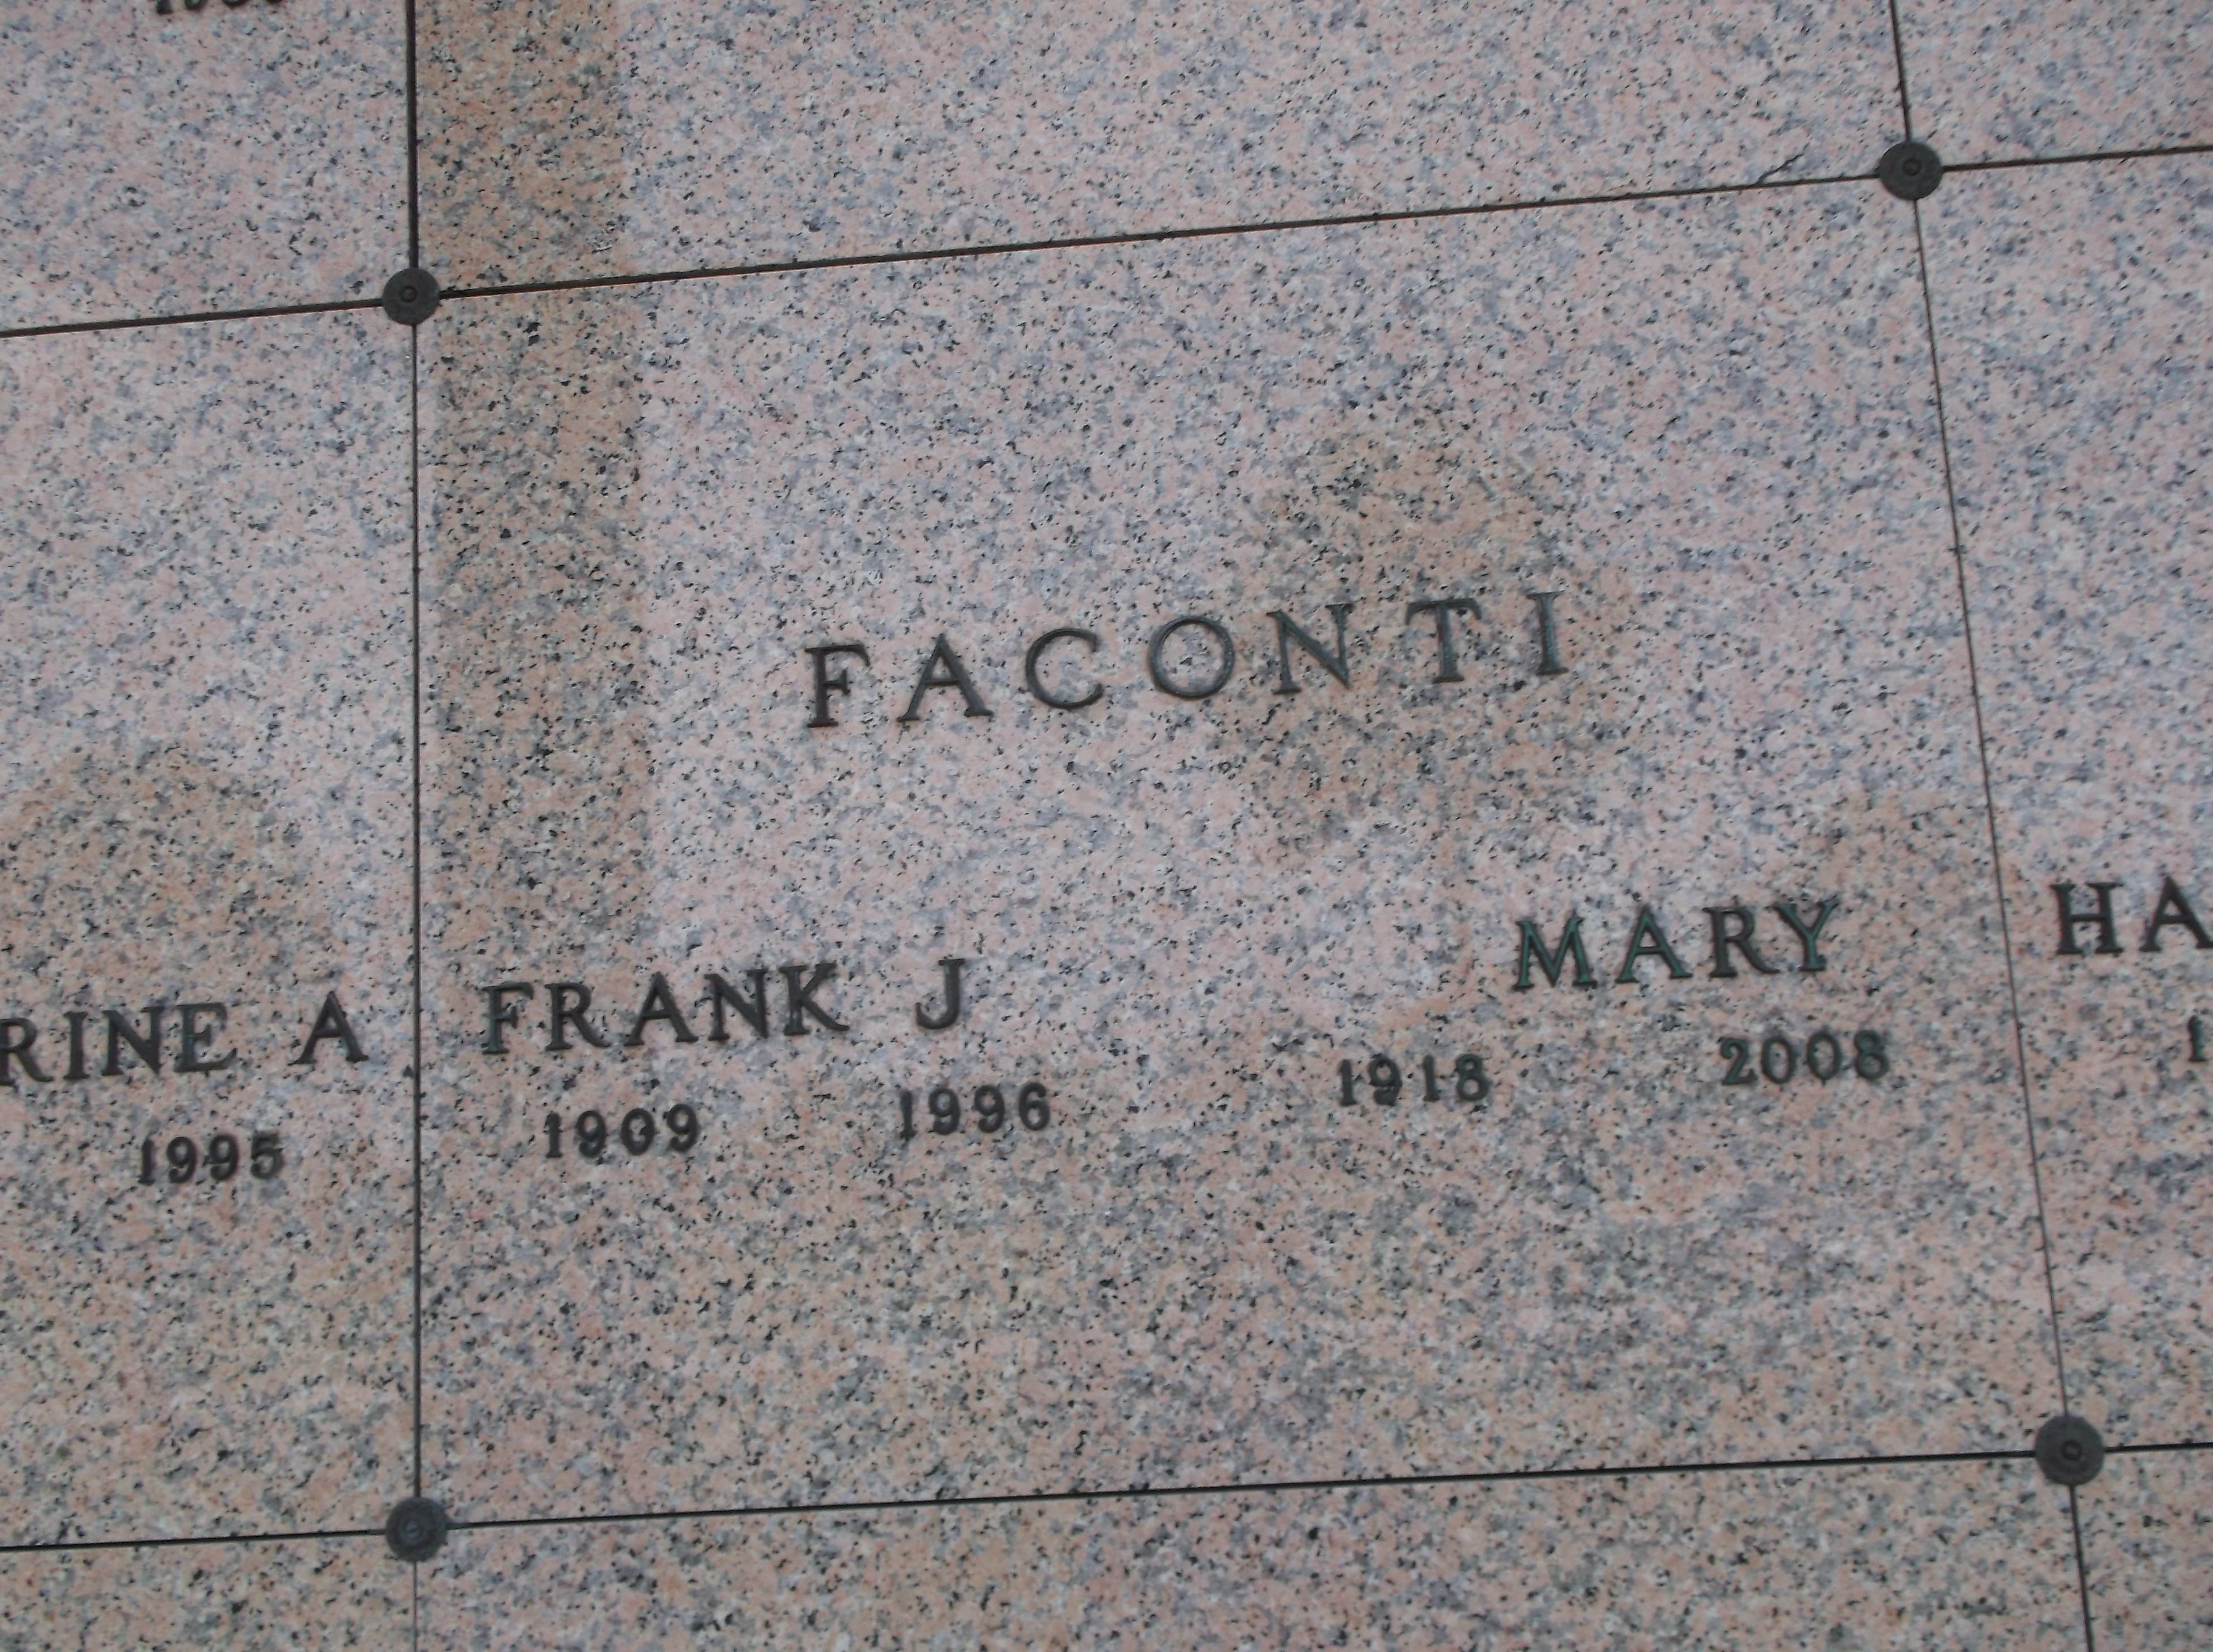 Frank J Faconti